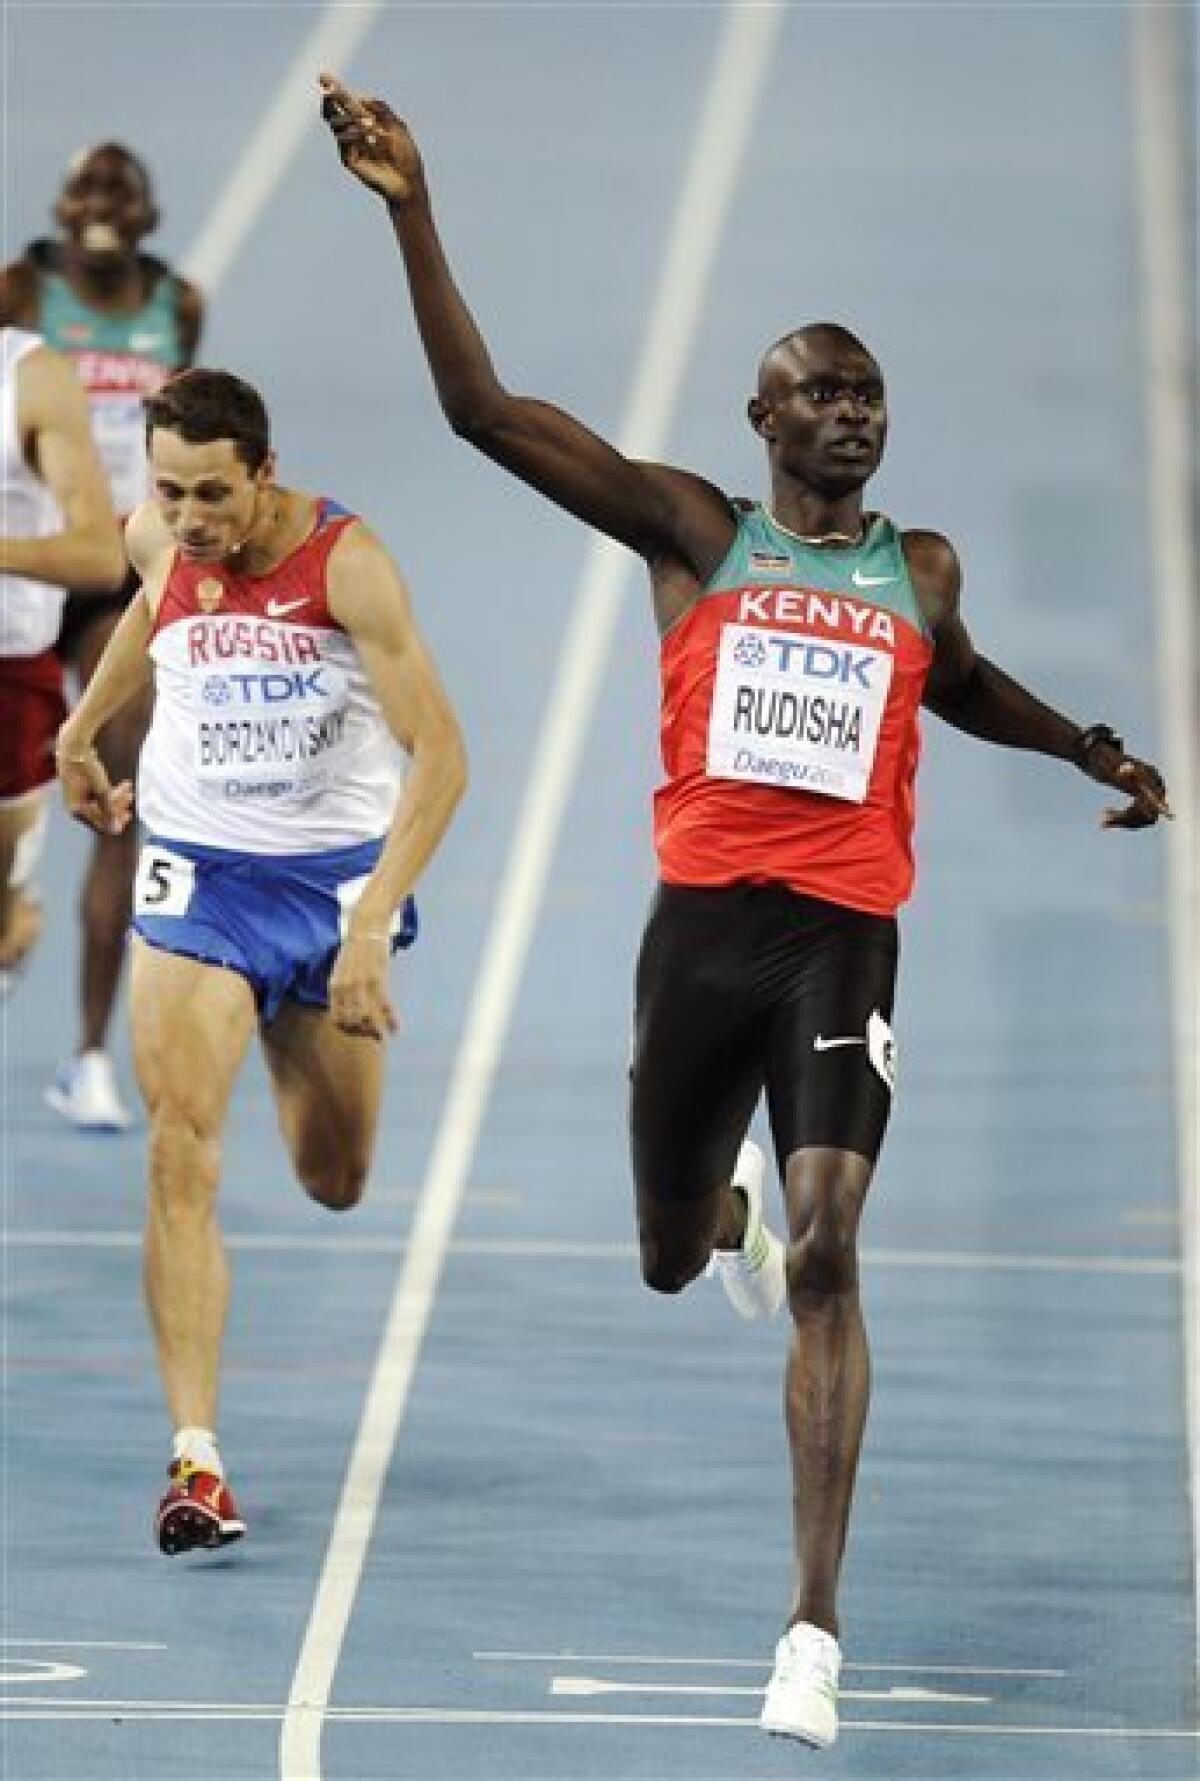 Kenya's David Lekuta Rudisha, right, reacts as he crosses the finish line ahead of Russia's Yuriy Borzakovskiy in the Men's 800m final at the World Athletics Championships in Daegu, South Korea, Tuesday, Aug. 30, 2011. (AP Photo/Martin Meissner)